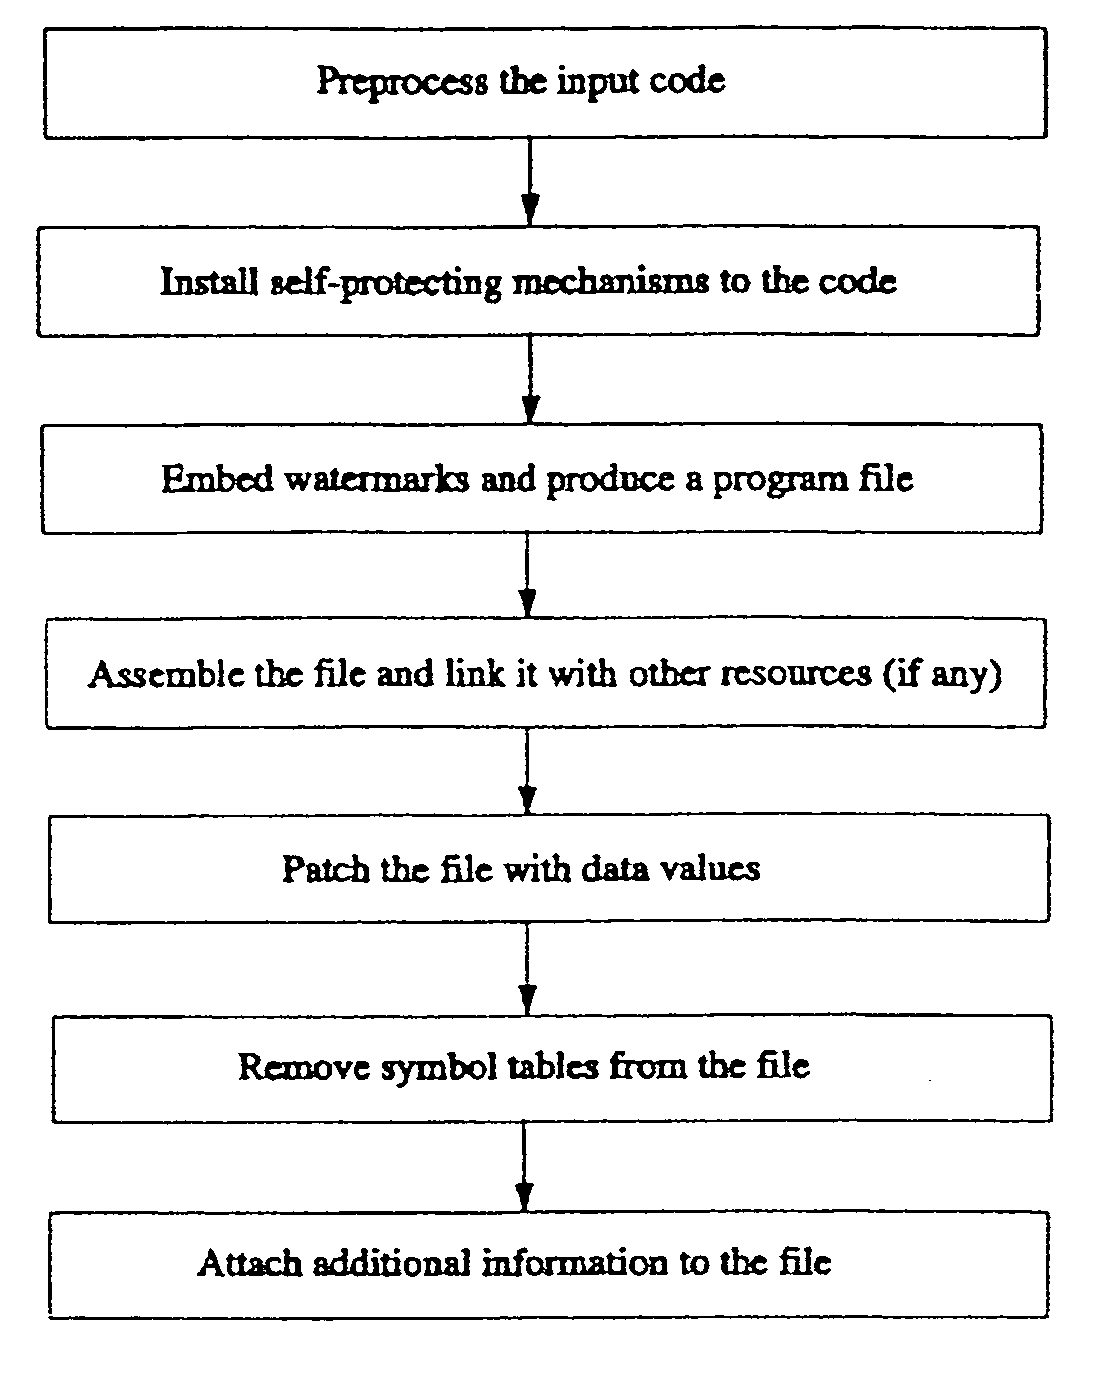 Method and system for tamperproofing software